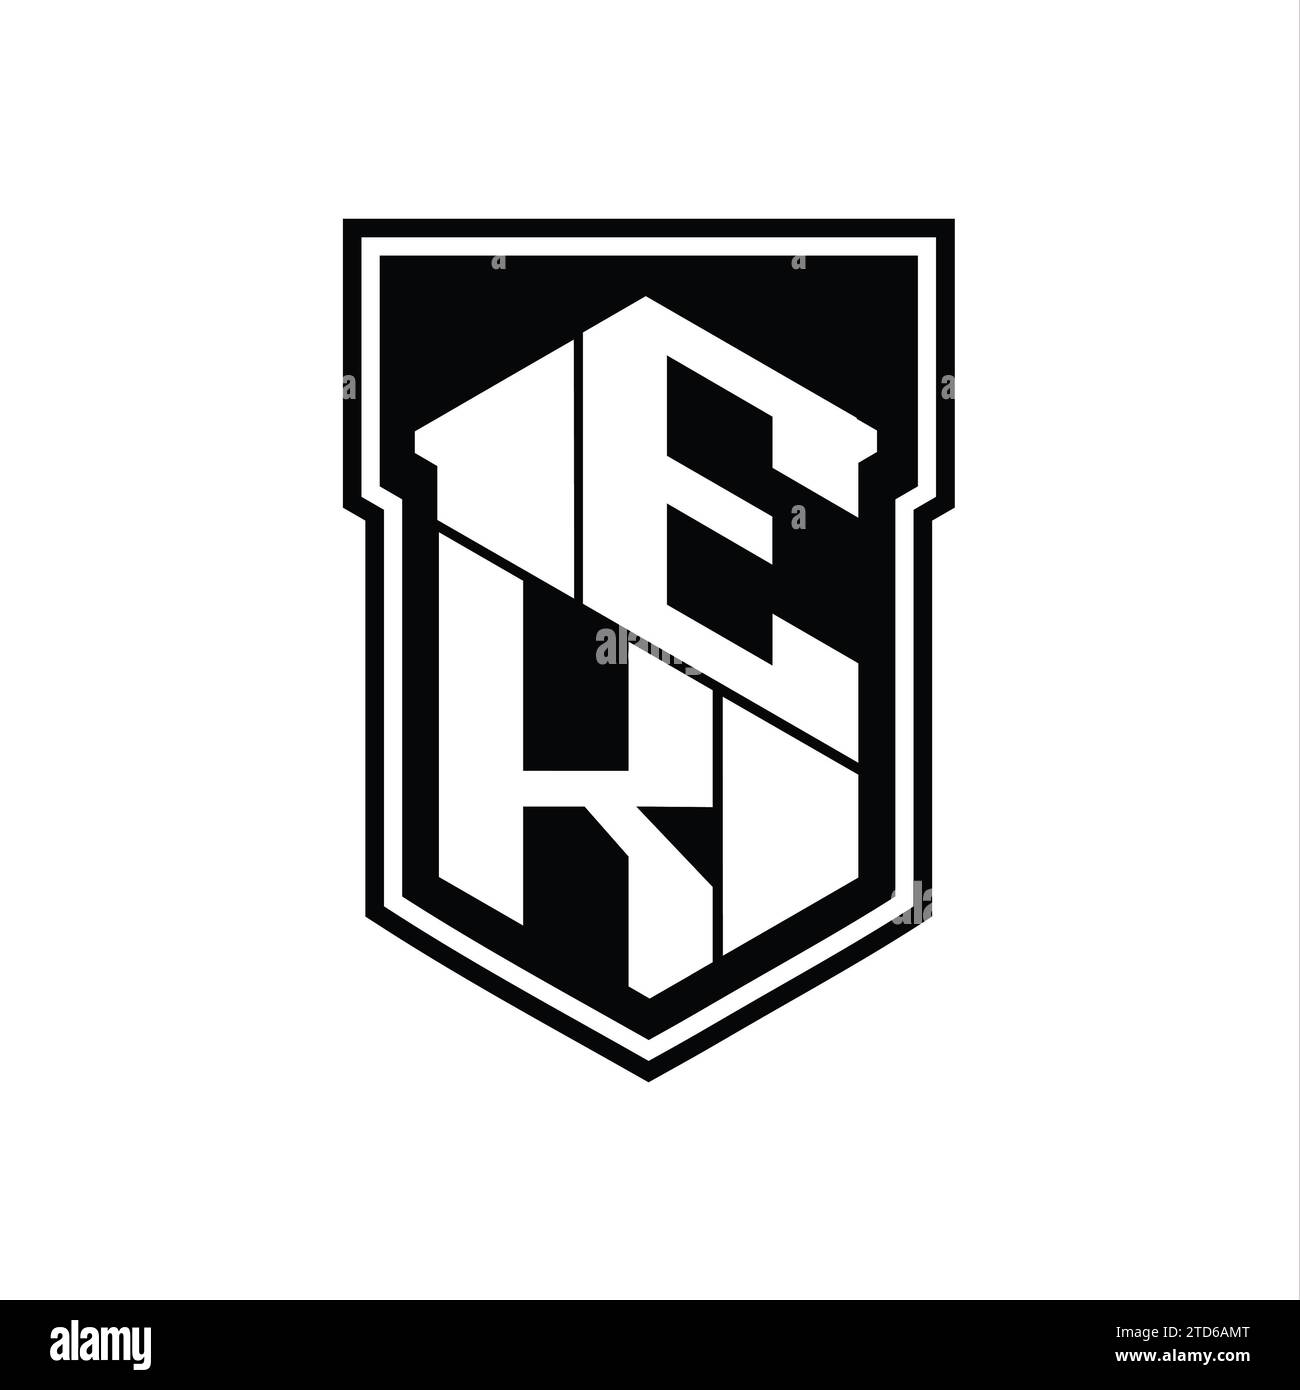 Ik logo monogram emblem style with crown shape Vector Image